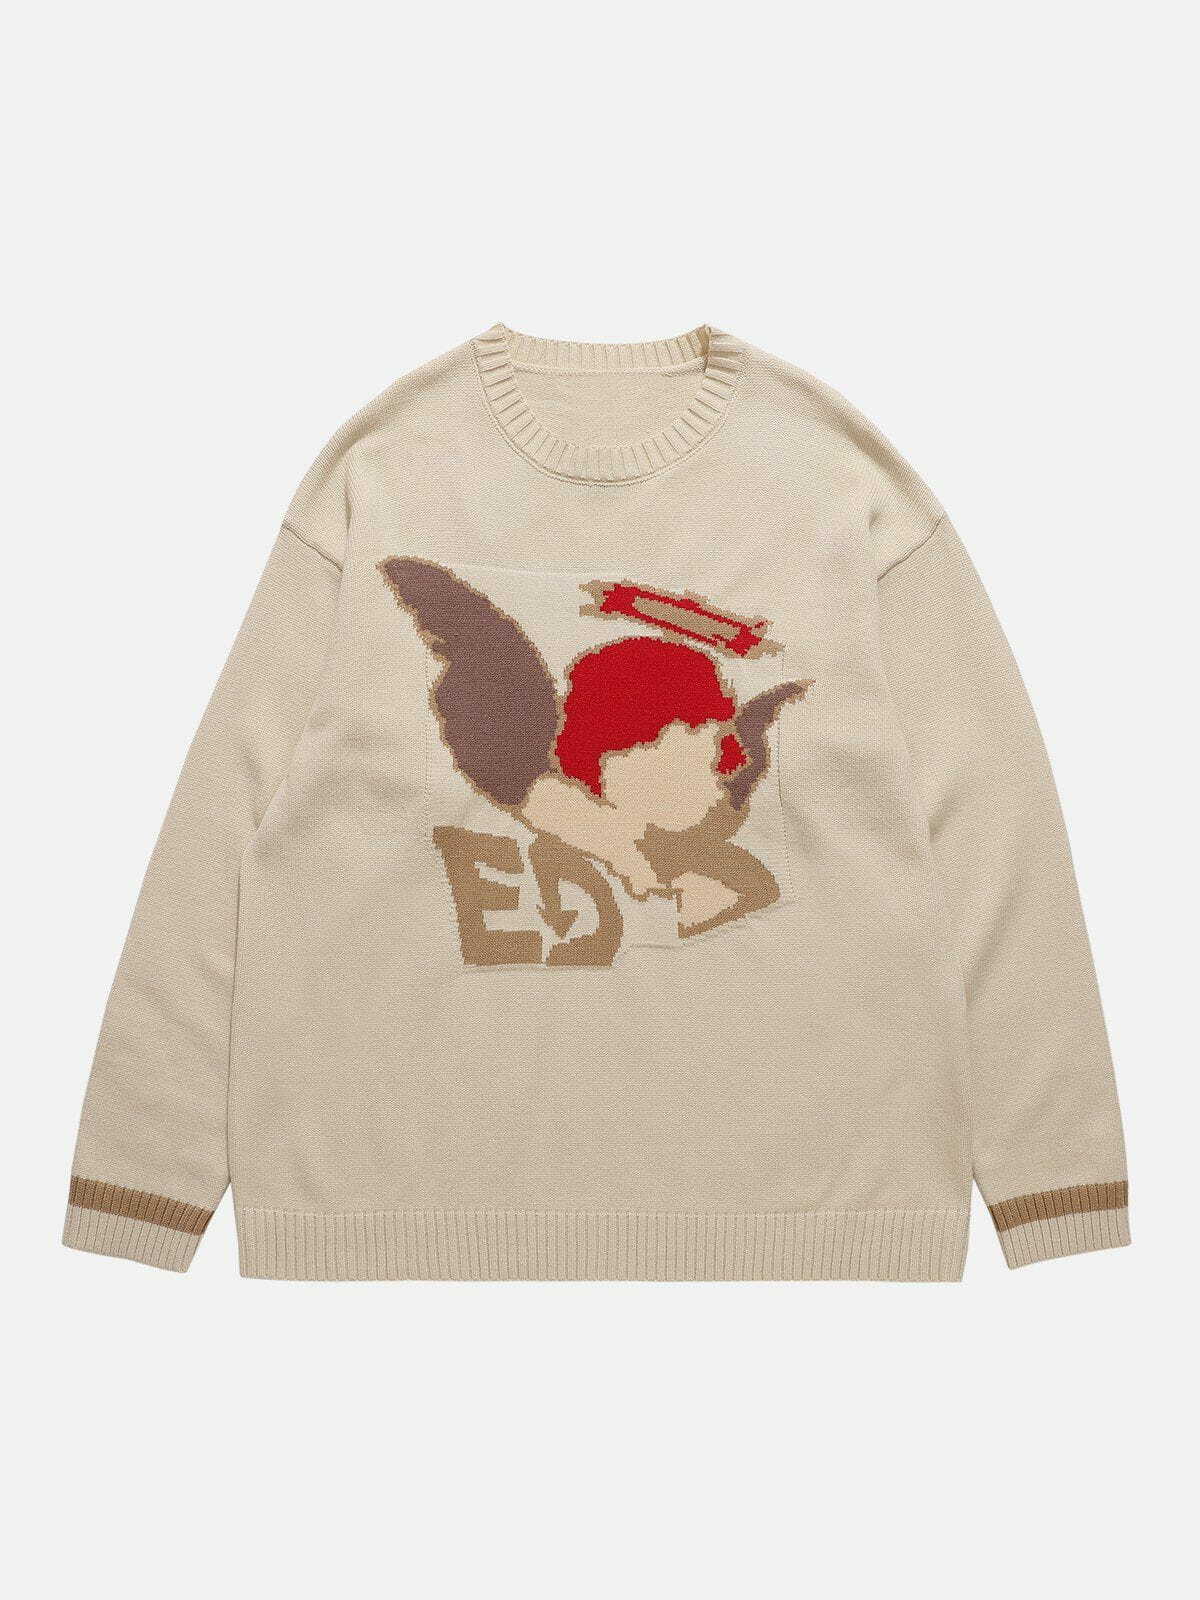 heart print cupid sweater retro & quirky y2k fashion 6188